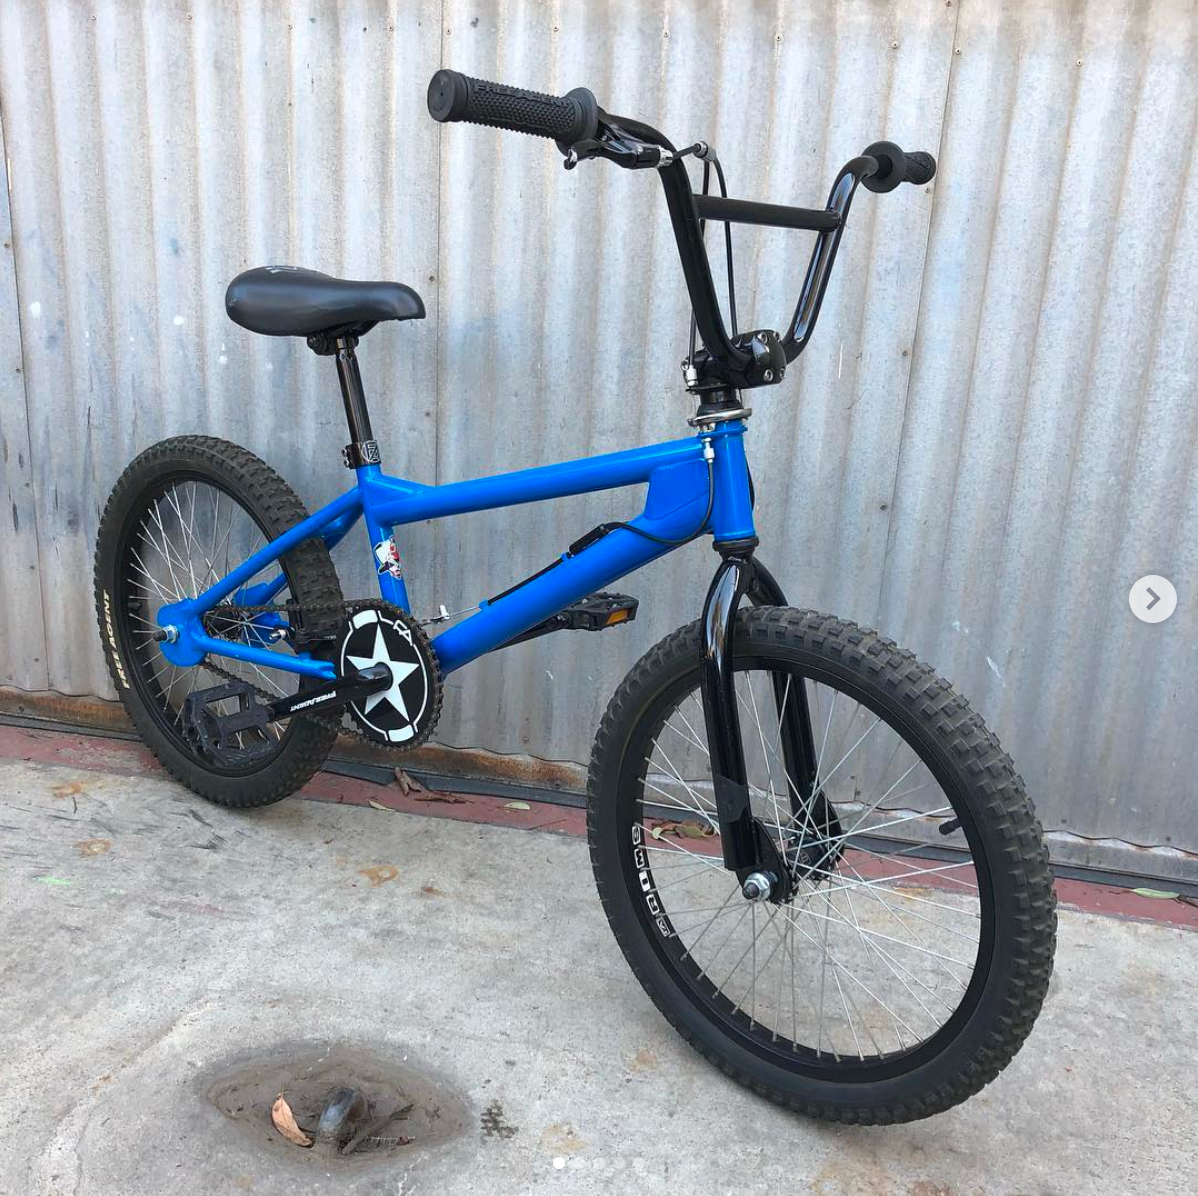 Free Agent BMX Bike - Used Kid's Bike